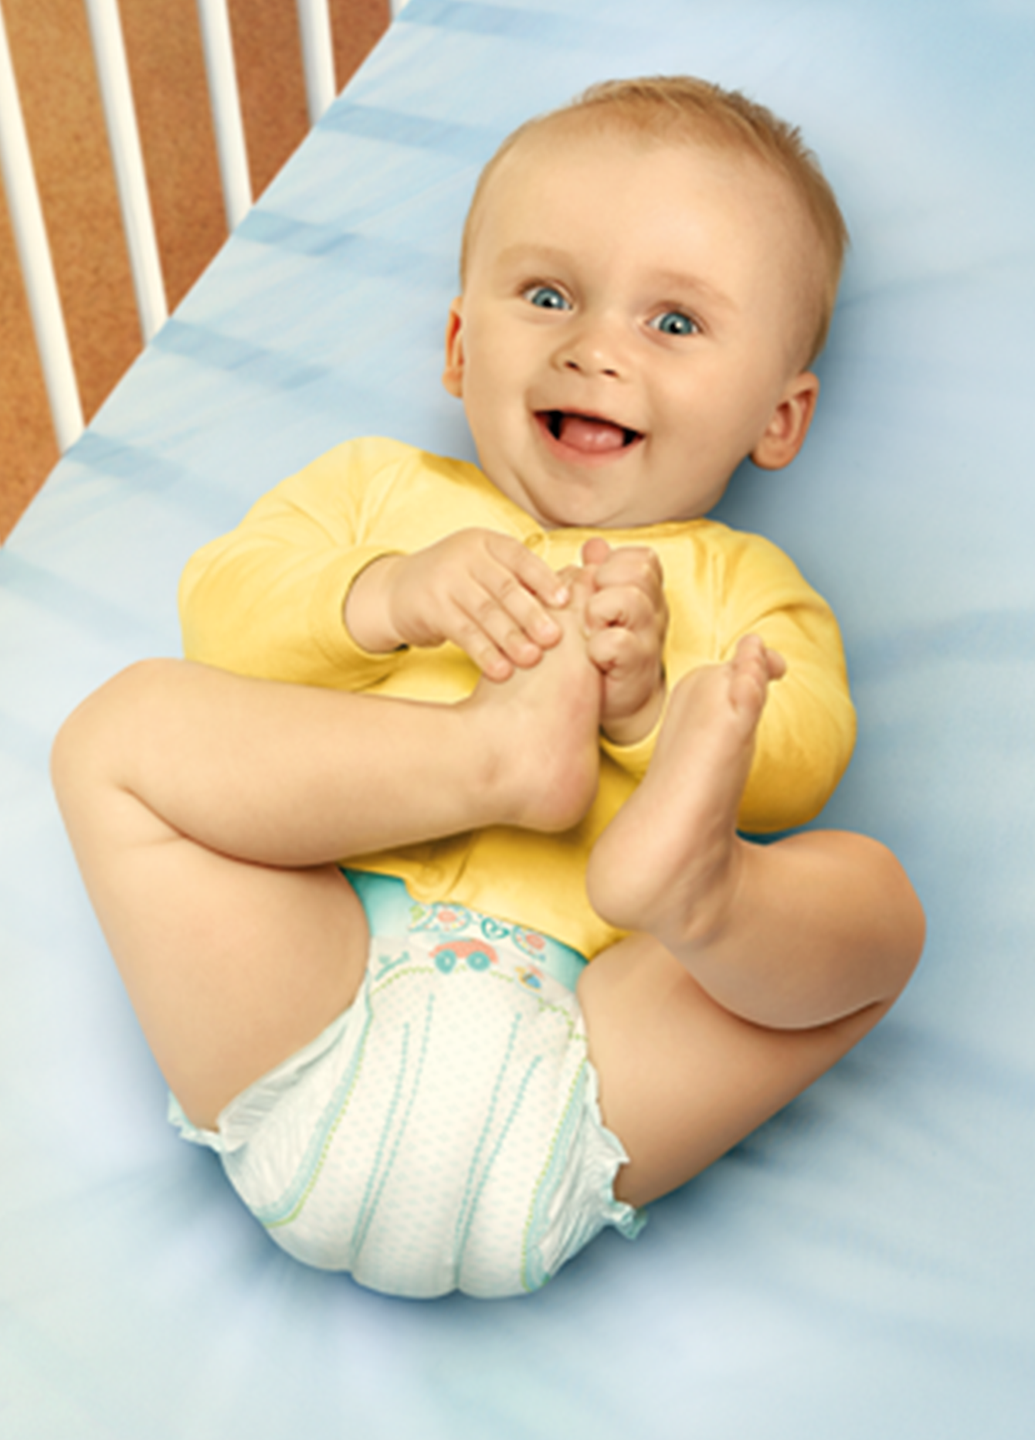 Подгузники Active Baby-Dry Maxi (7-14 кг), 49 шт. Pampers (9452273)